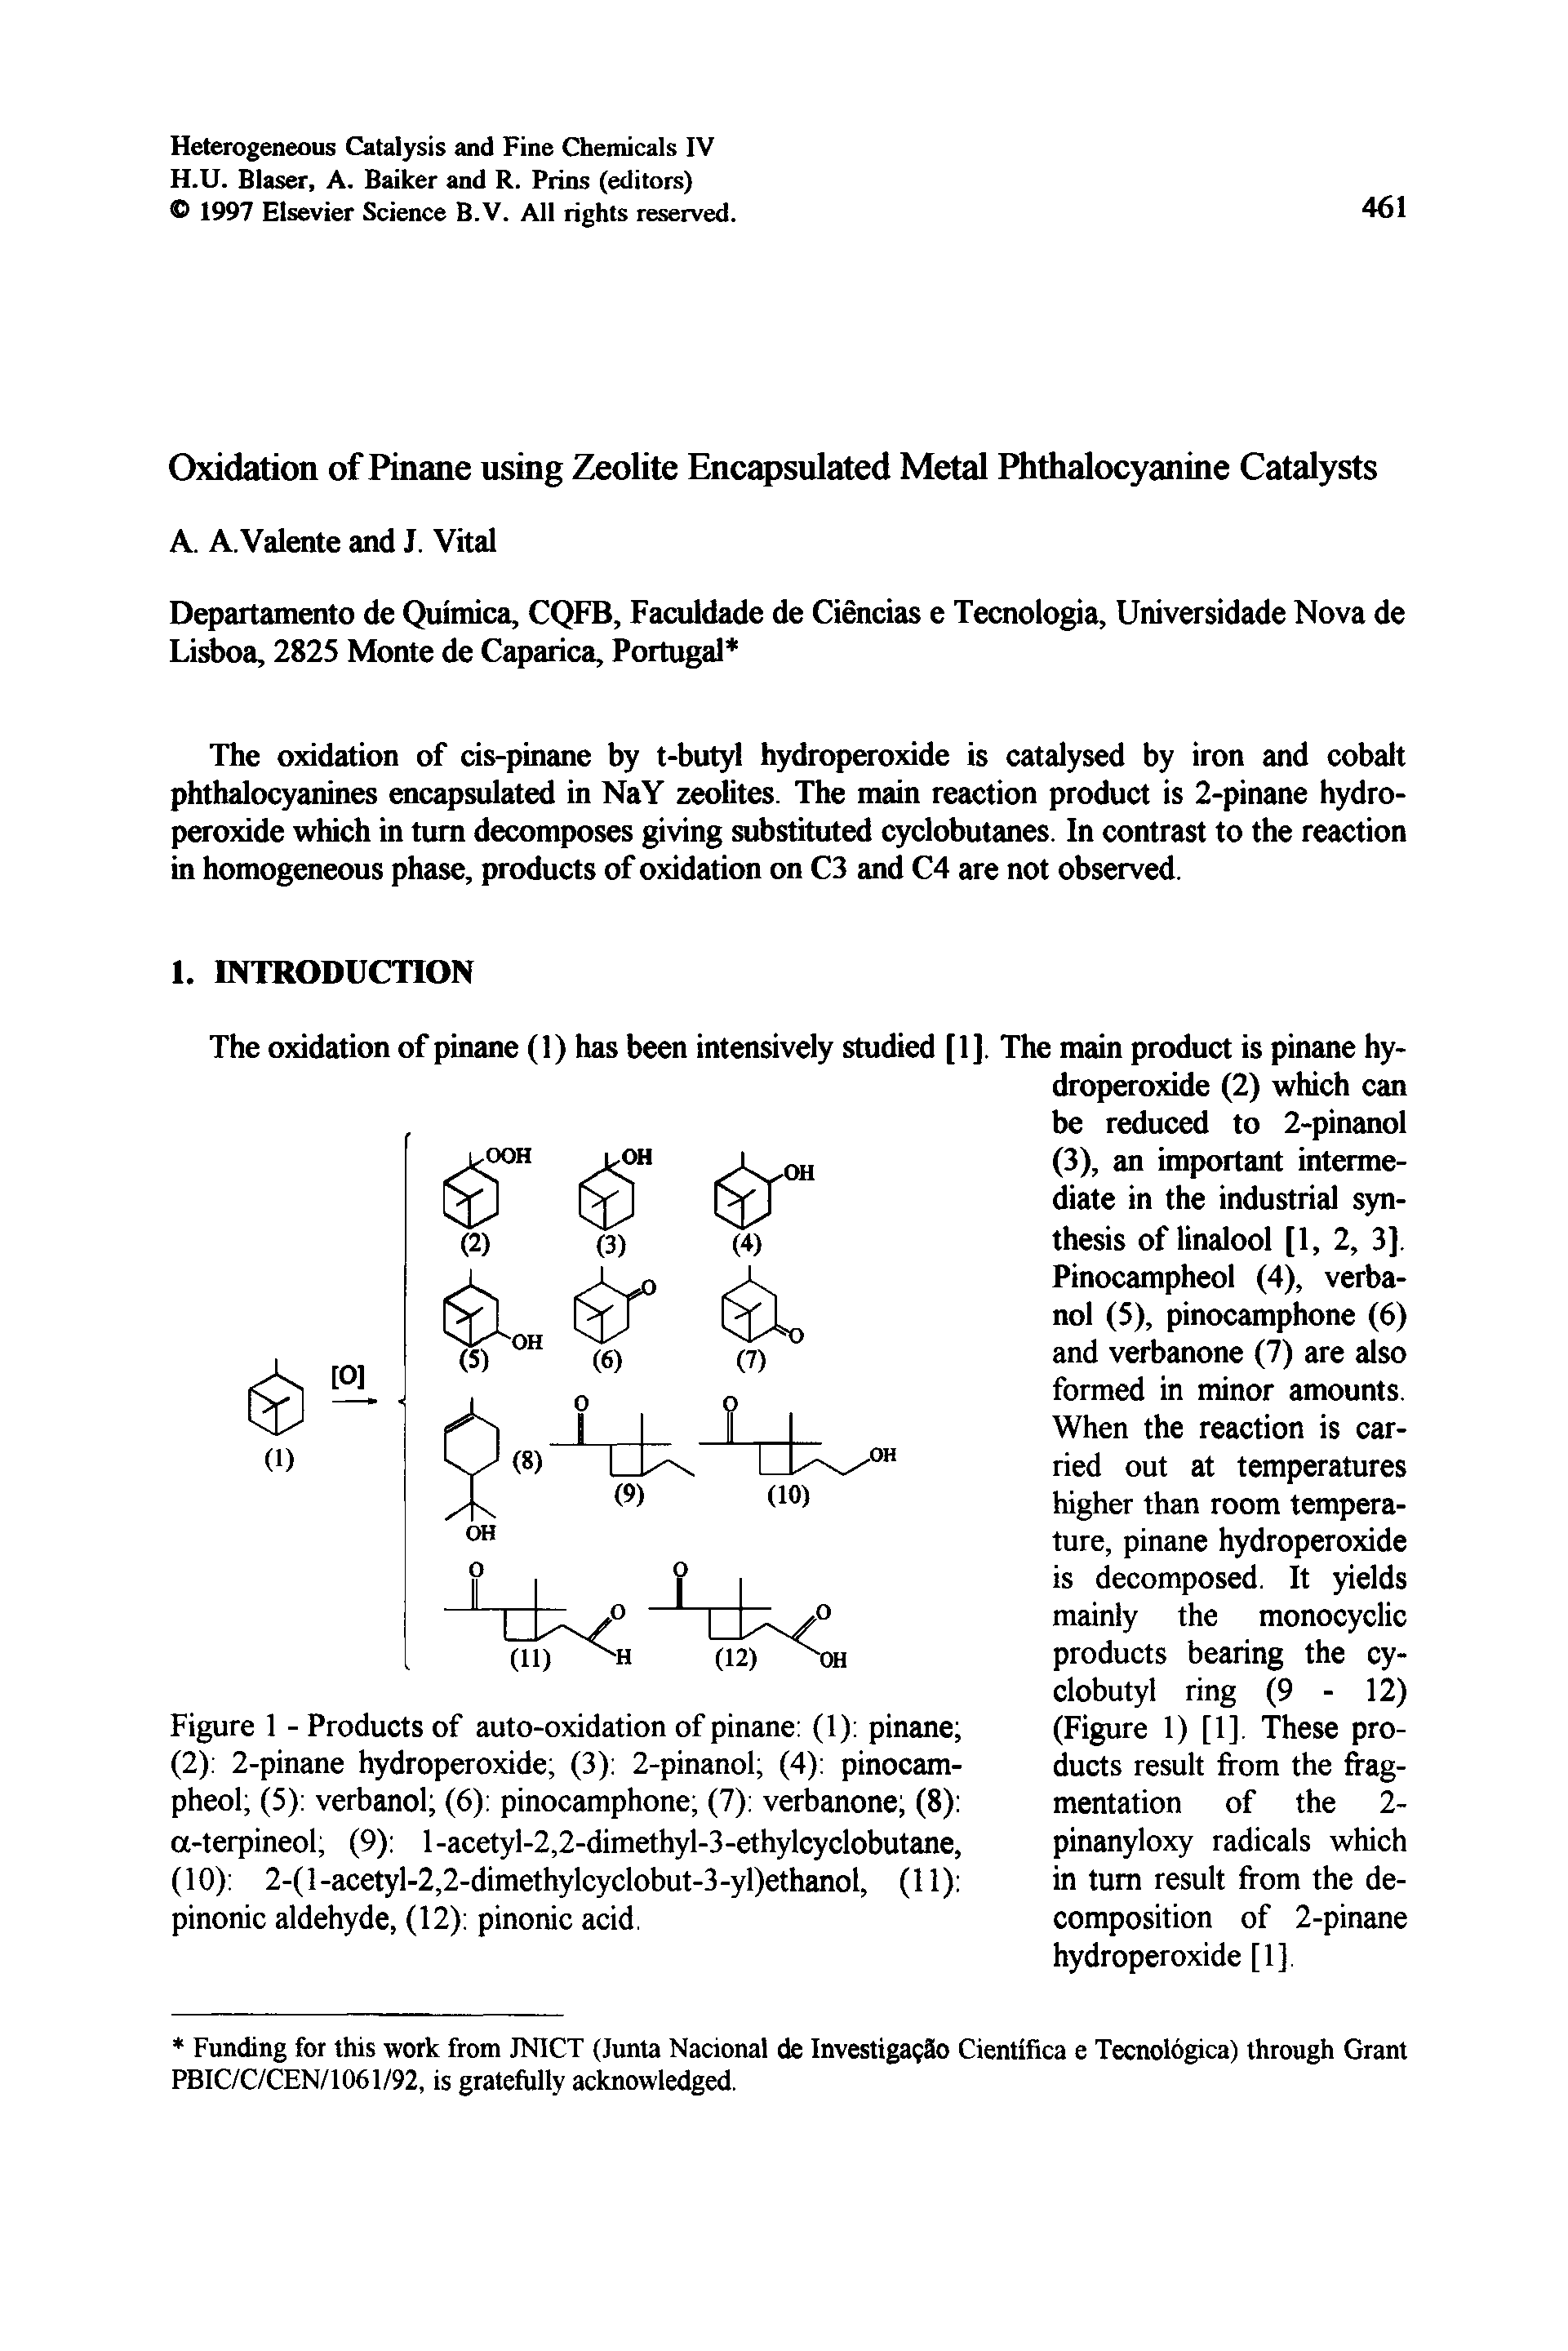 Figure 1 - Products of auto-oxidation of pinane (1) pinane (2) 2-pinane hydroperoxide (3) 2-pinanol (4) pinocam-pheol (5) verbanol (6) pinocamphone (7) verbanone (8) a-terpineol, (9) 1-acetyl-2,2-dimethyl-3-ethylcyclobutane, (10) 2-(l-acetyl-2,2-dimethylcyclobut-3-yl)ethanol, (11) pinonic aldehyde, (12) pinonic acid.